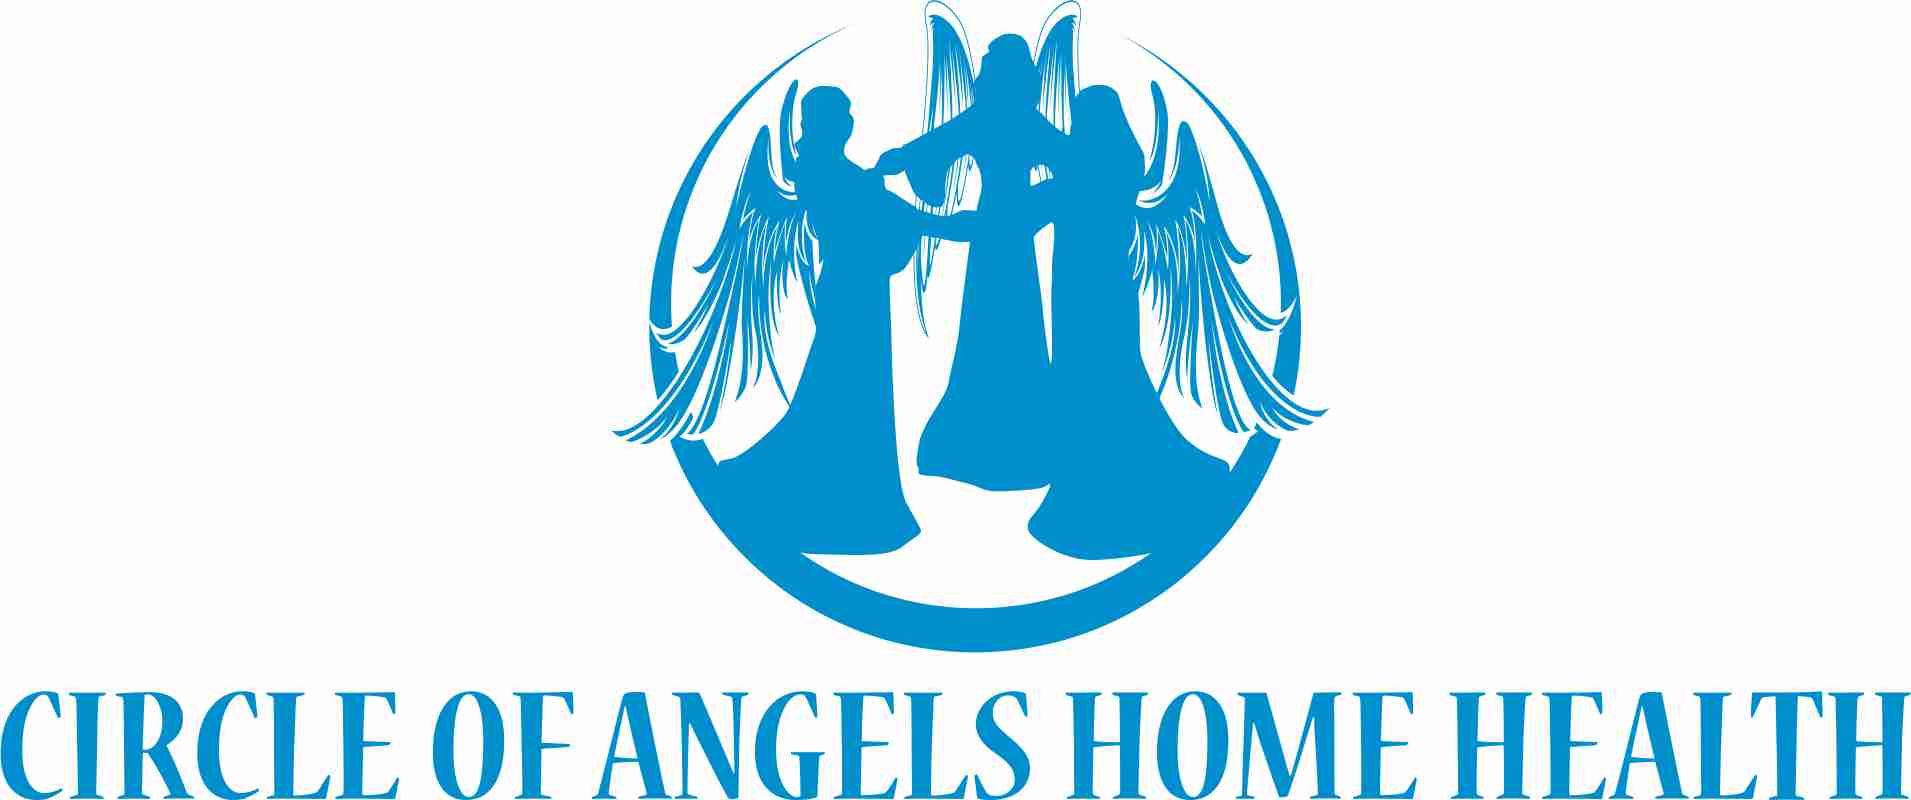 Circle of Angels Home Health